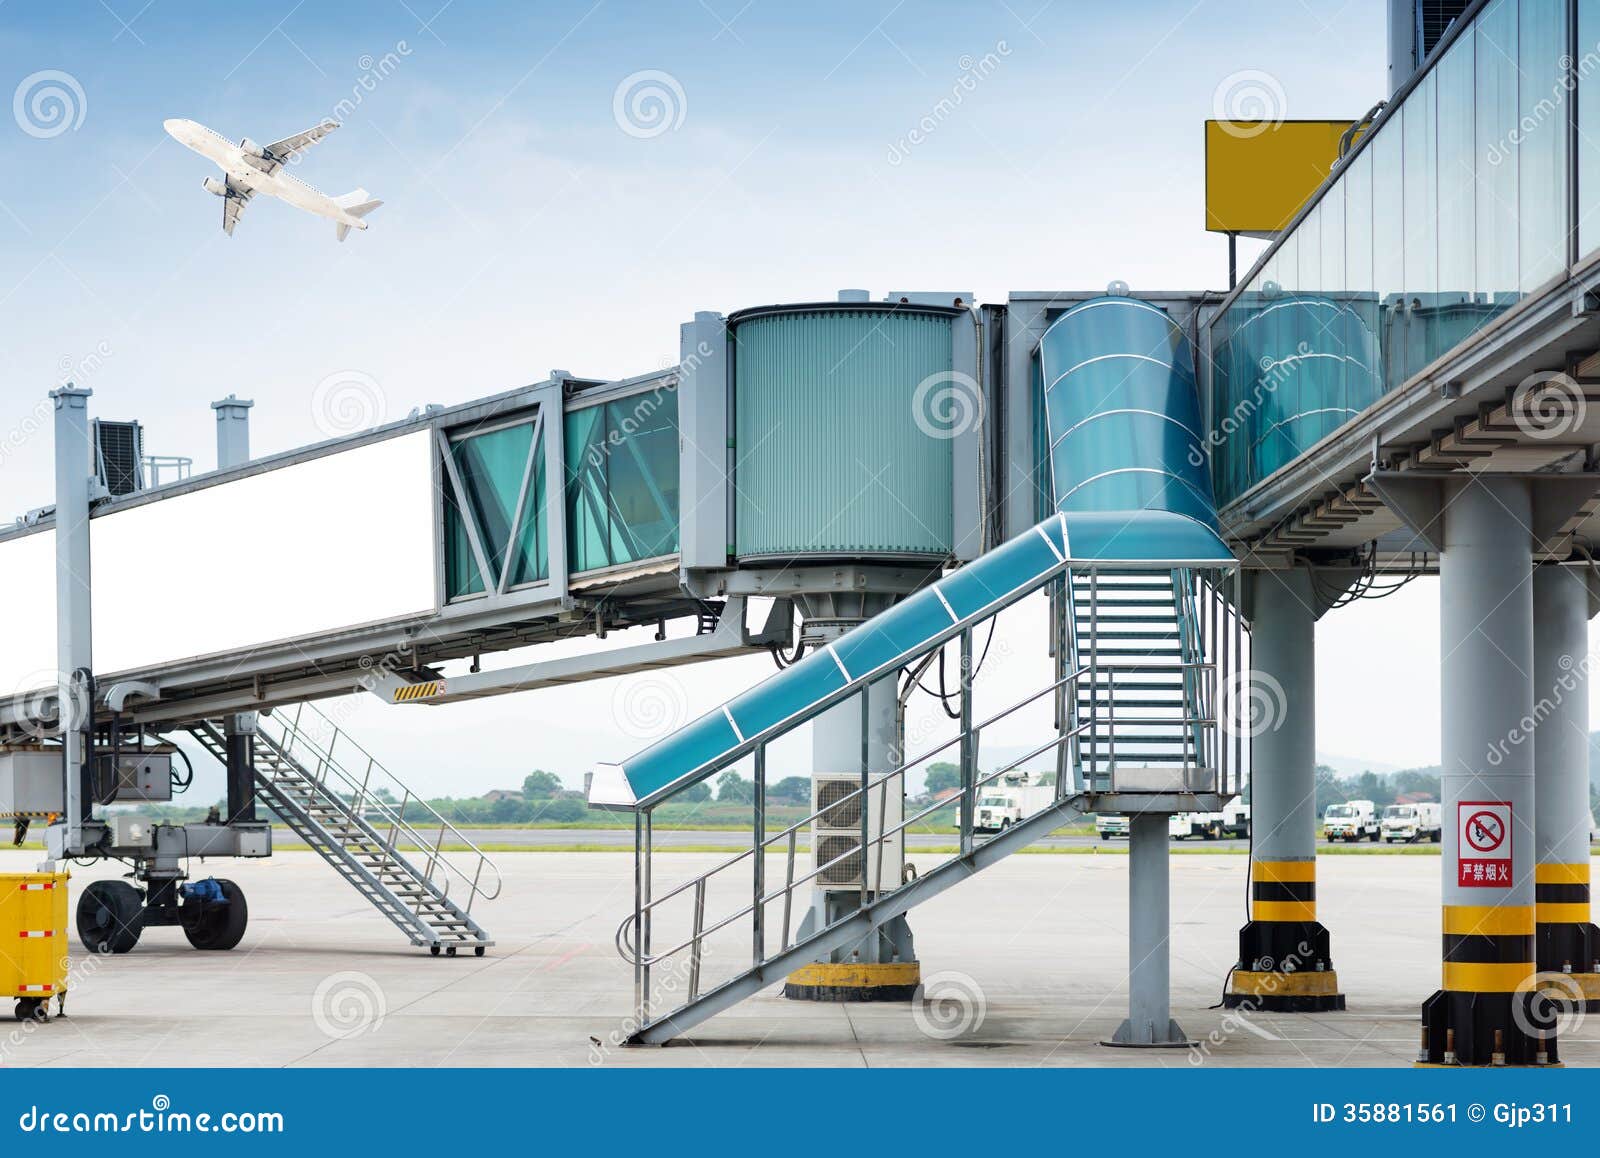 Aerobridge at airport stock image. Image of runway, ramp - 35881561